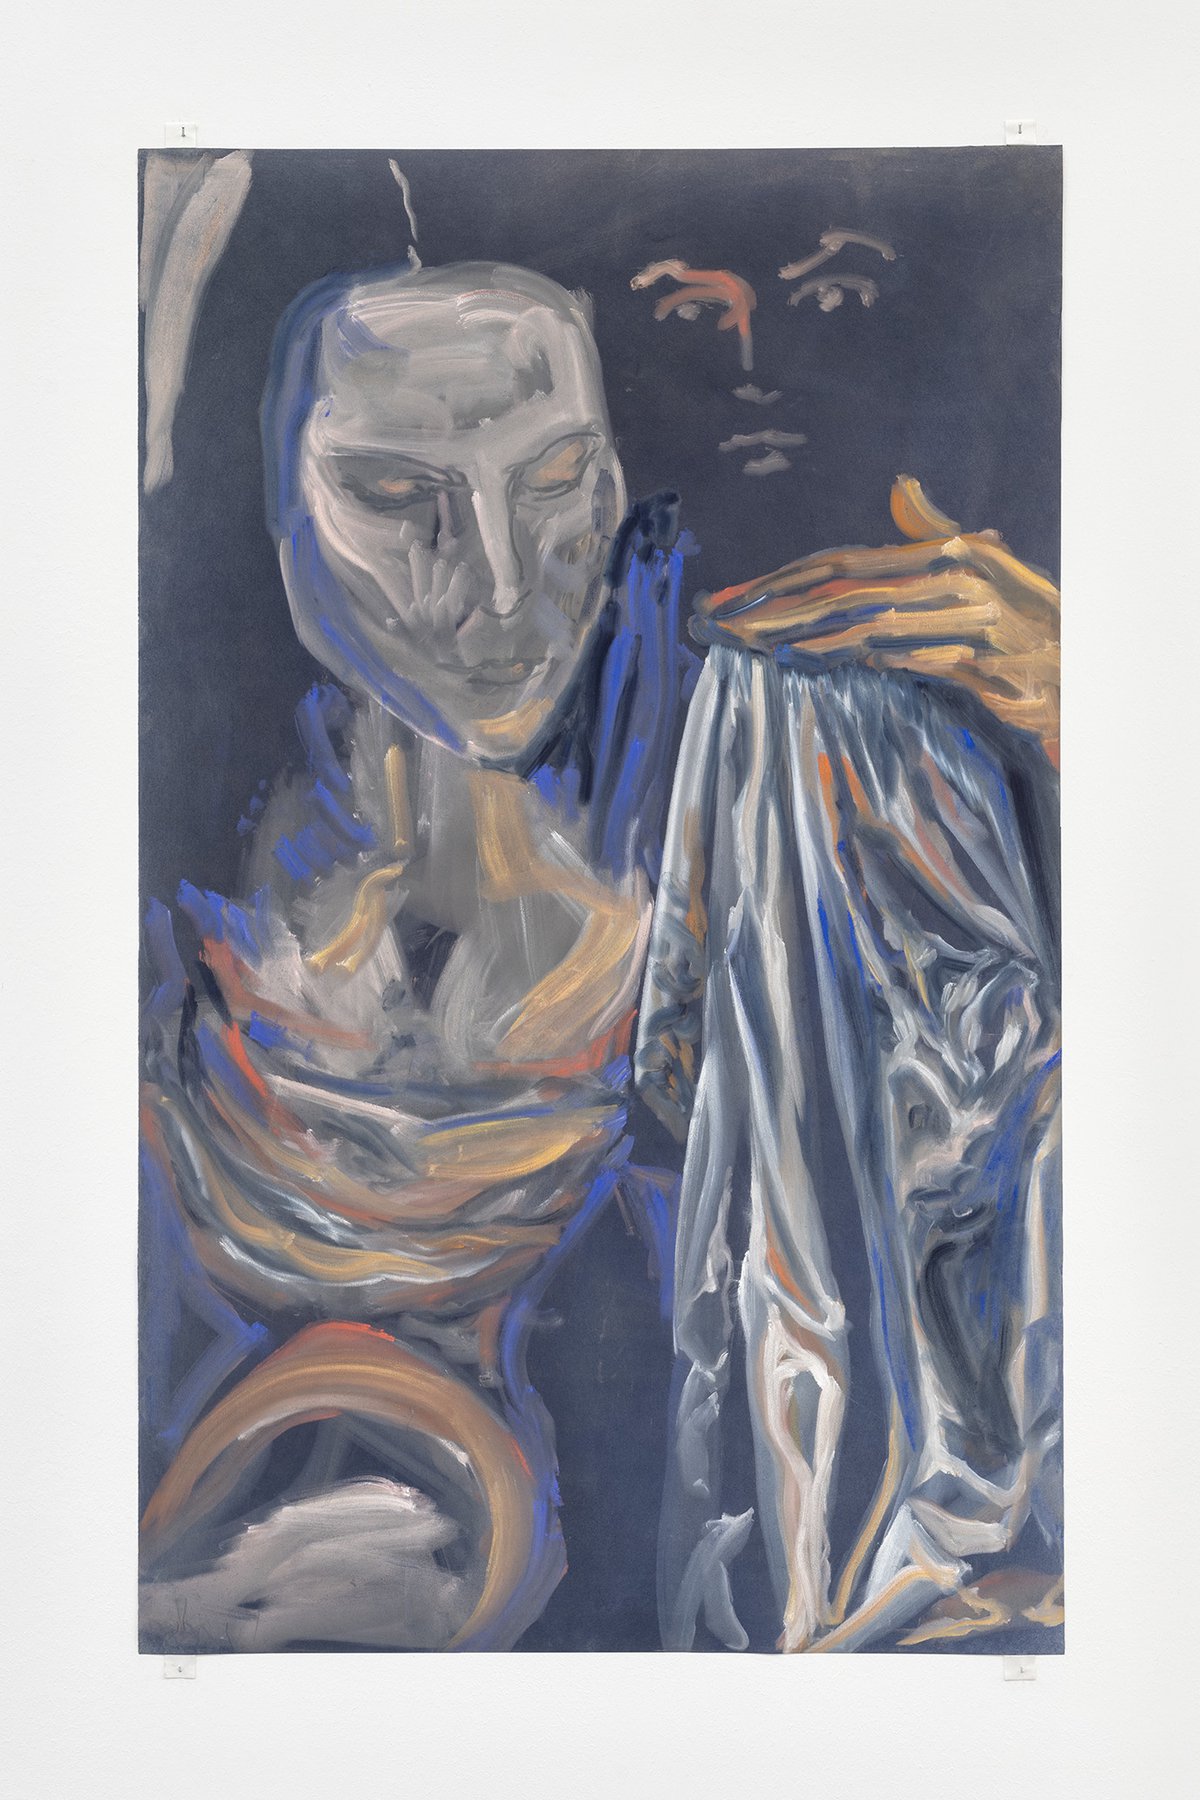 Evelyn PlaschgLiturgy, 2021Pigment on Paper99.5 x 61 cm